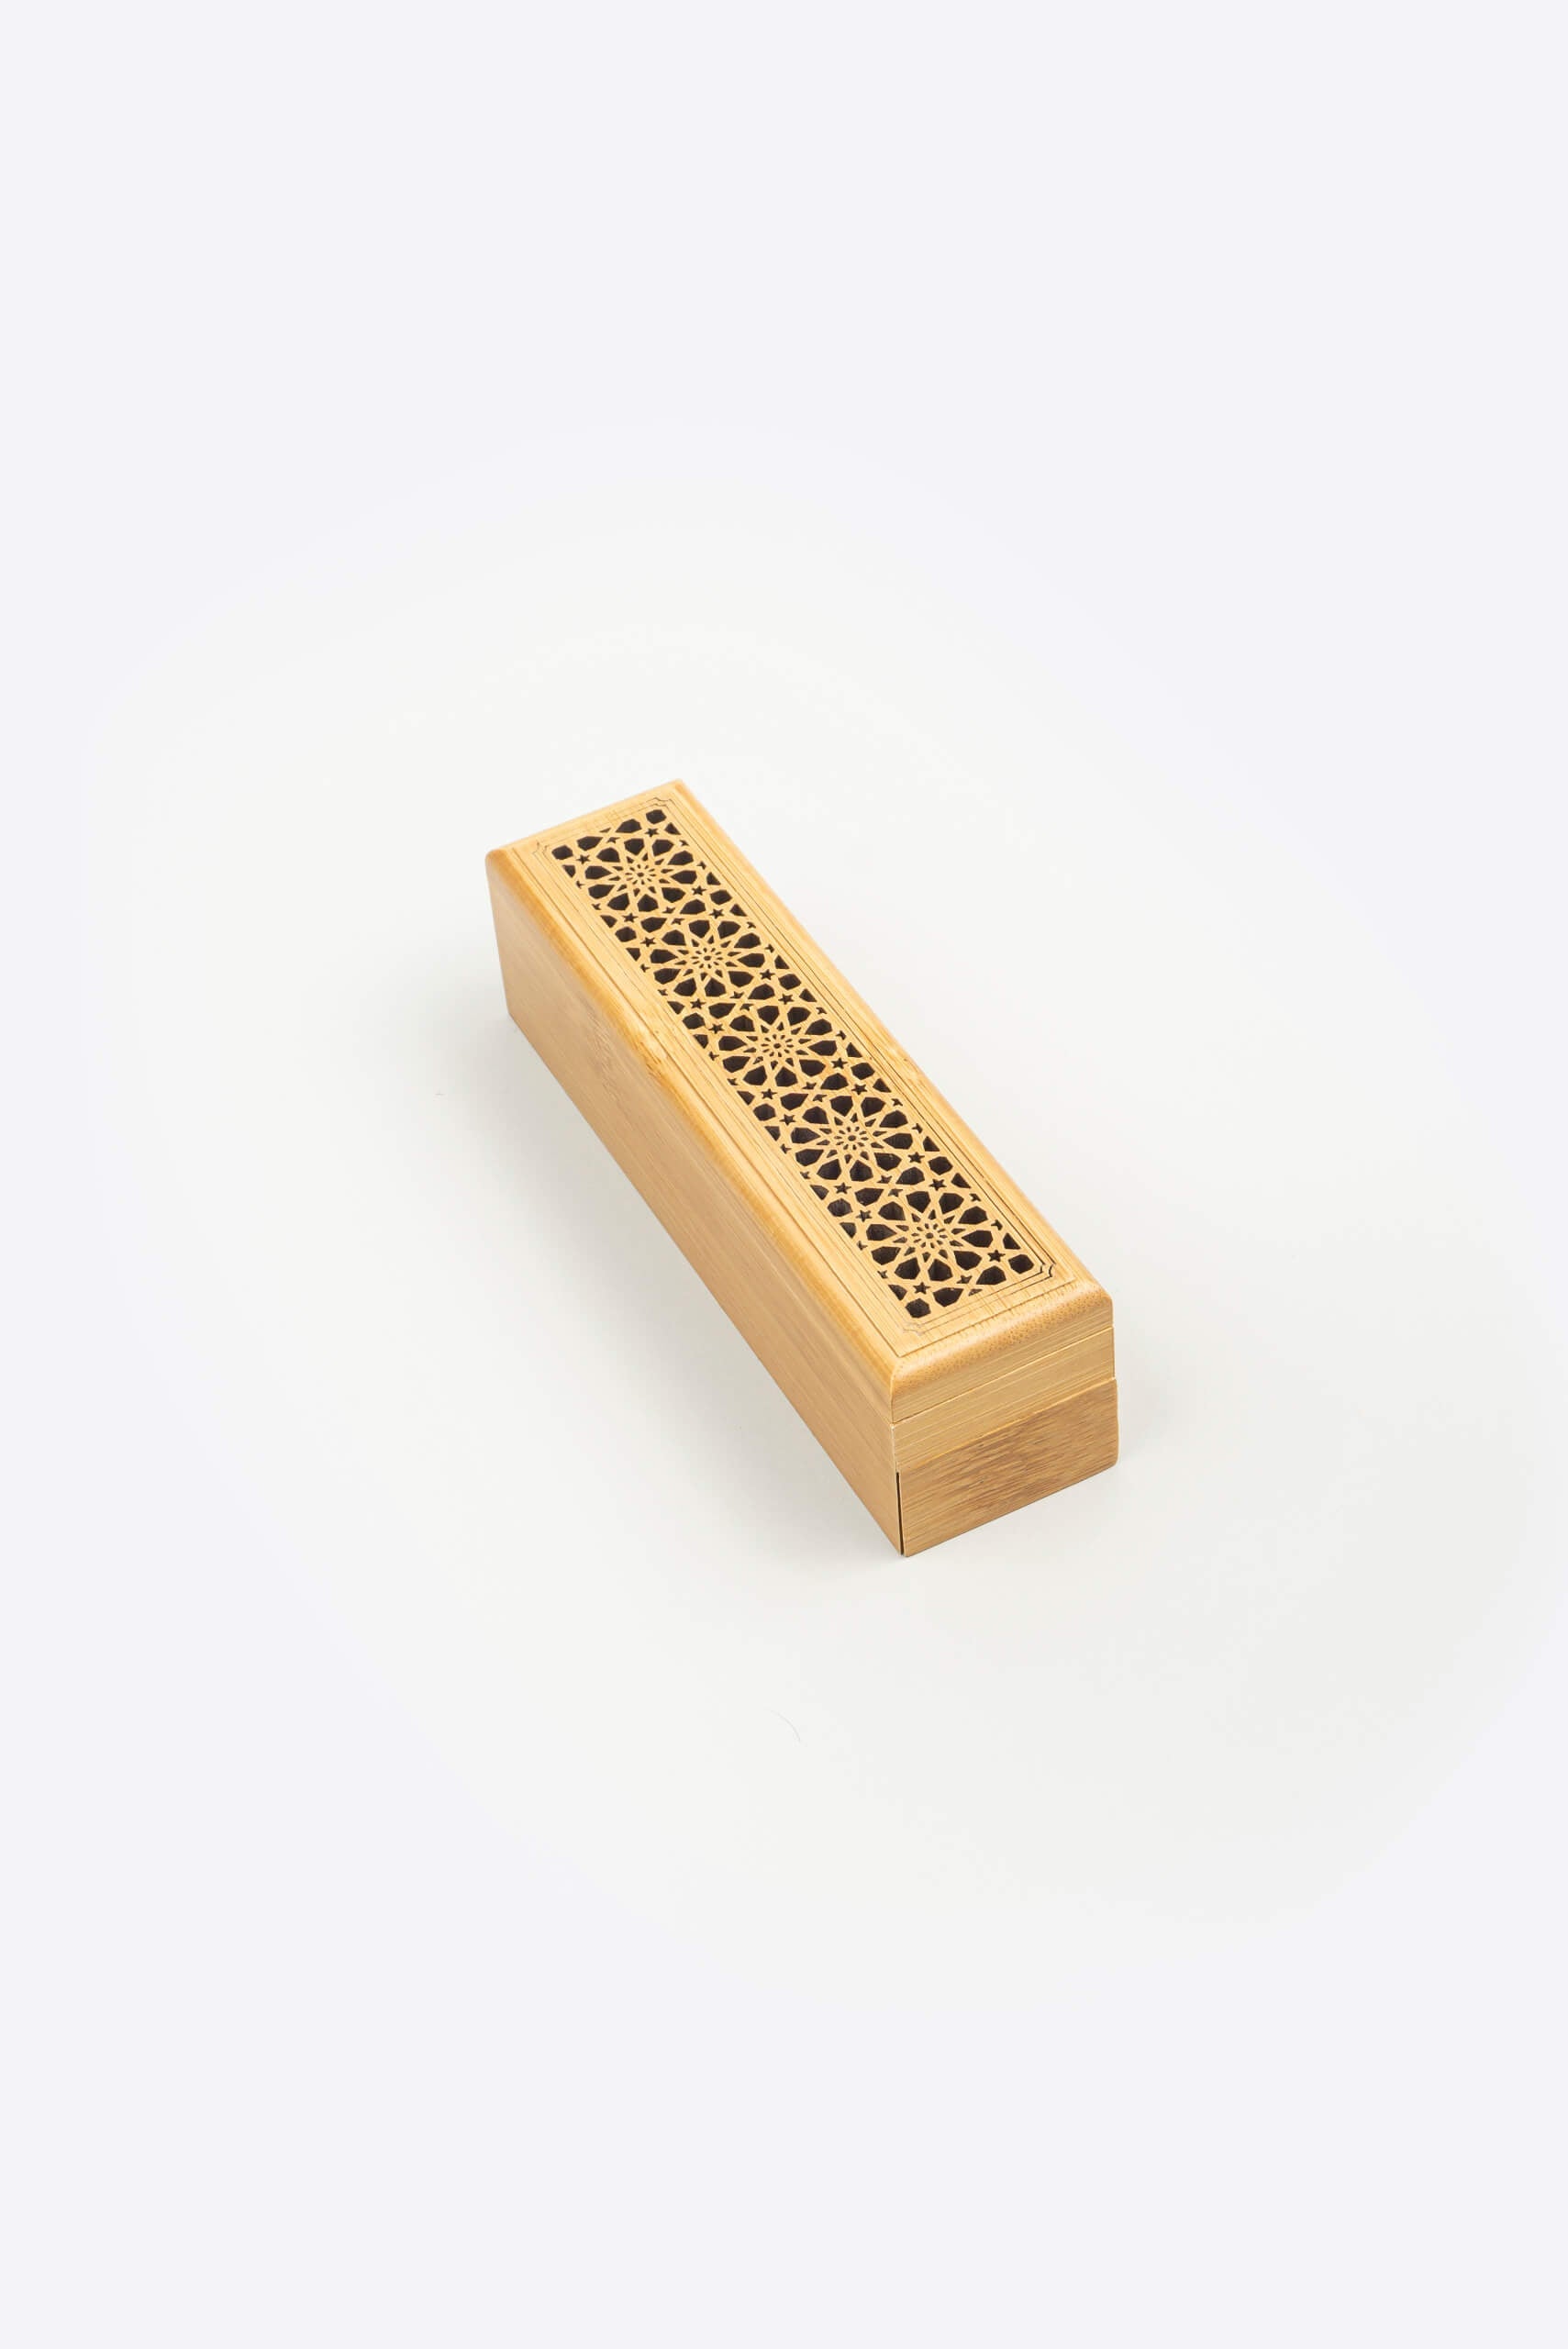 Wooden Sticks Incense Box - Incense - Muslim Lifestyle Store